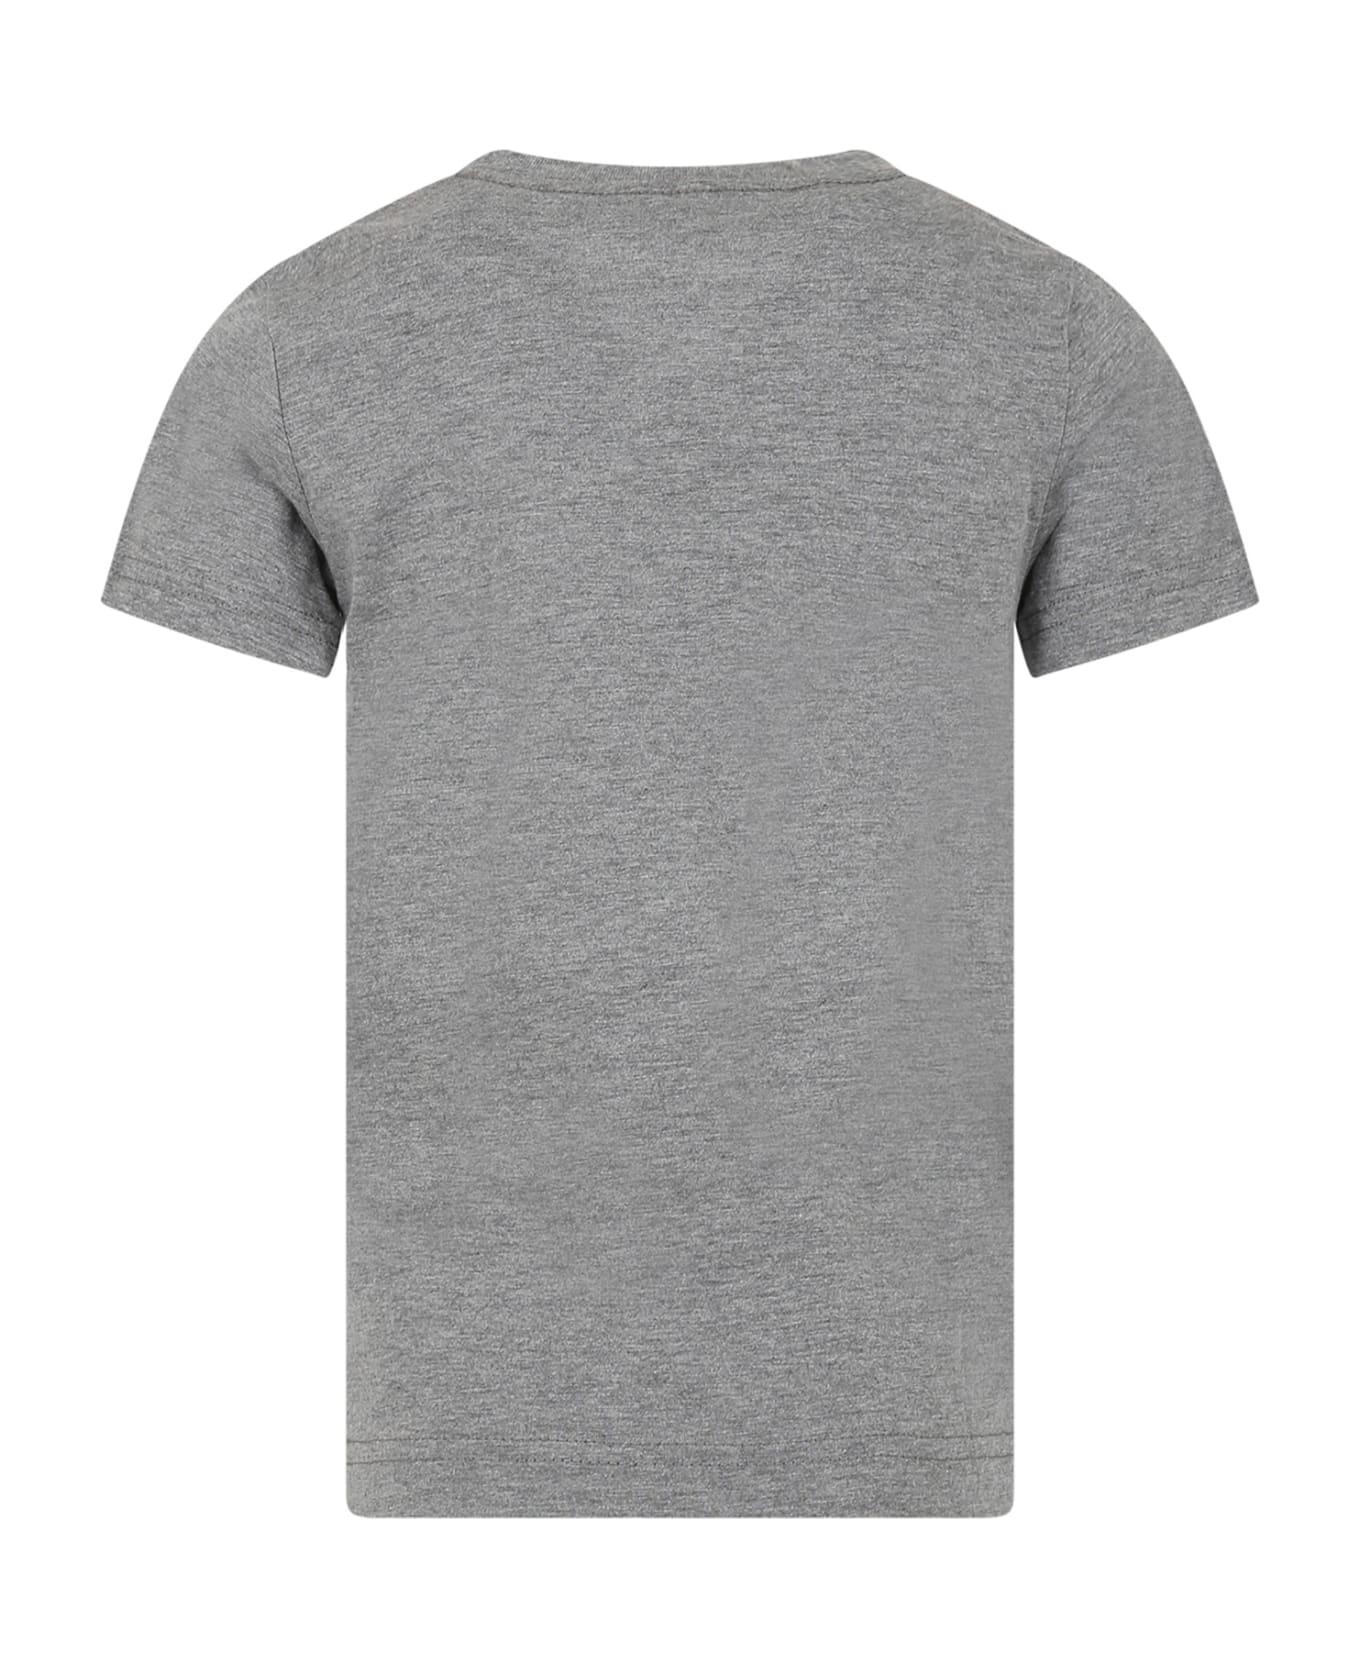 Nike Grey T-shirt For Kids Iconic Swoosh - Grey